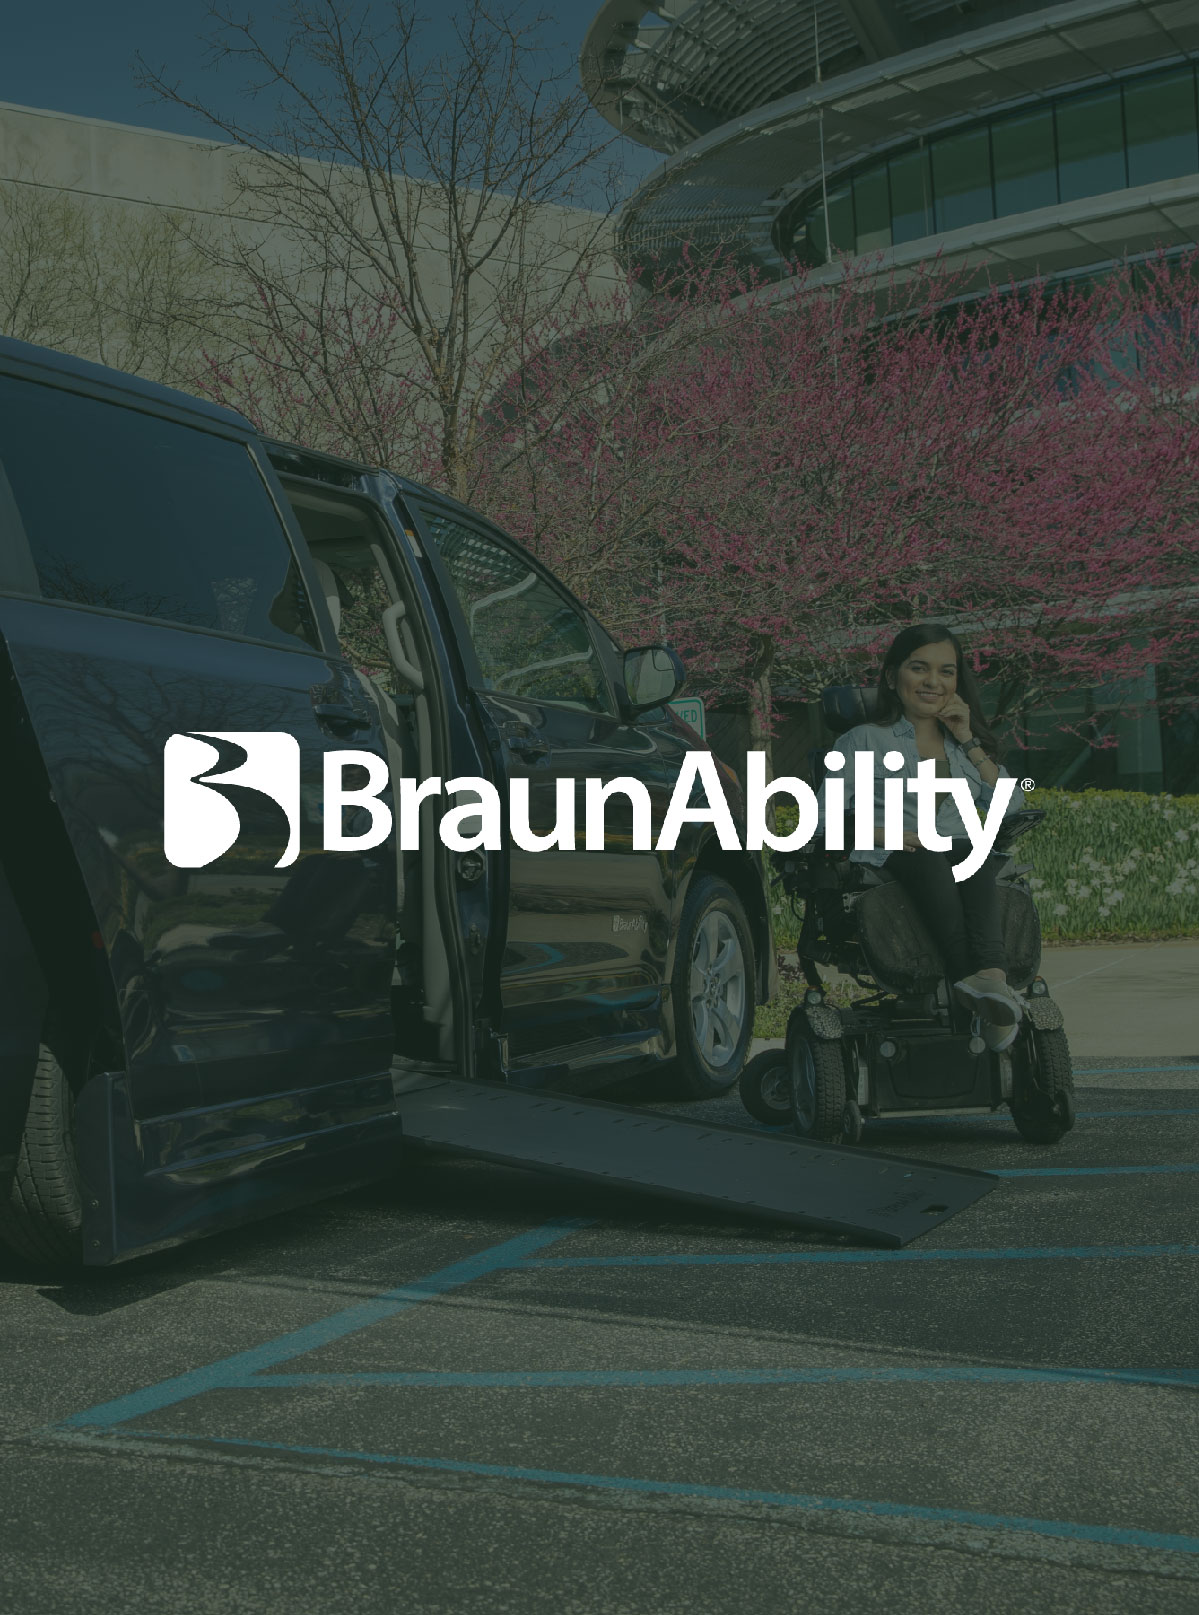 BraunAbility lift with logo